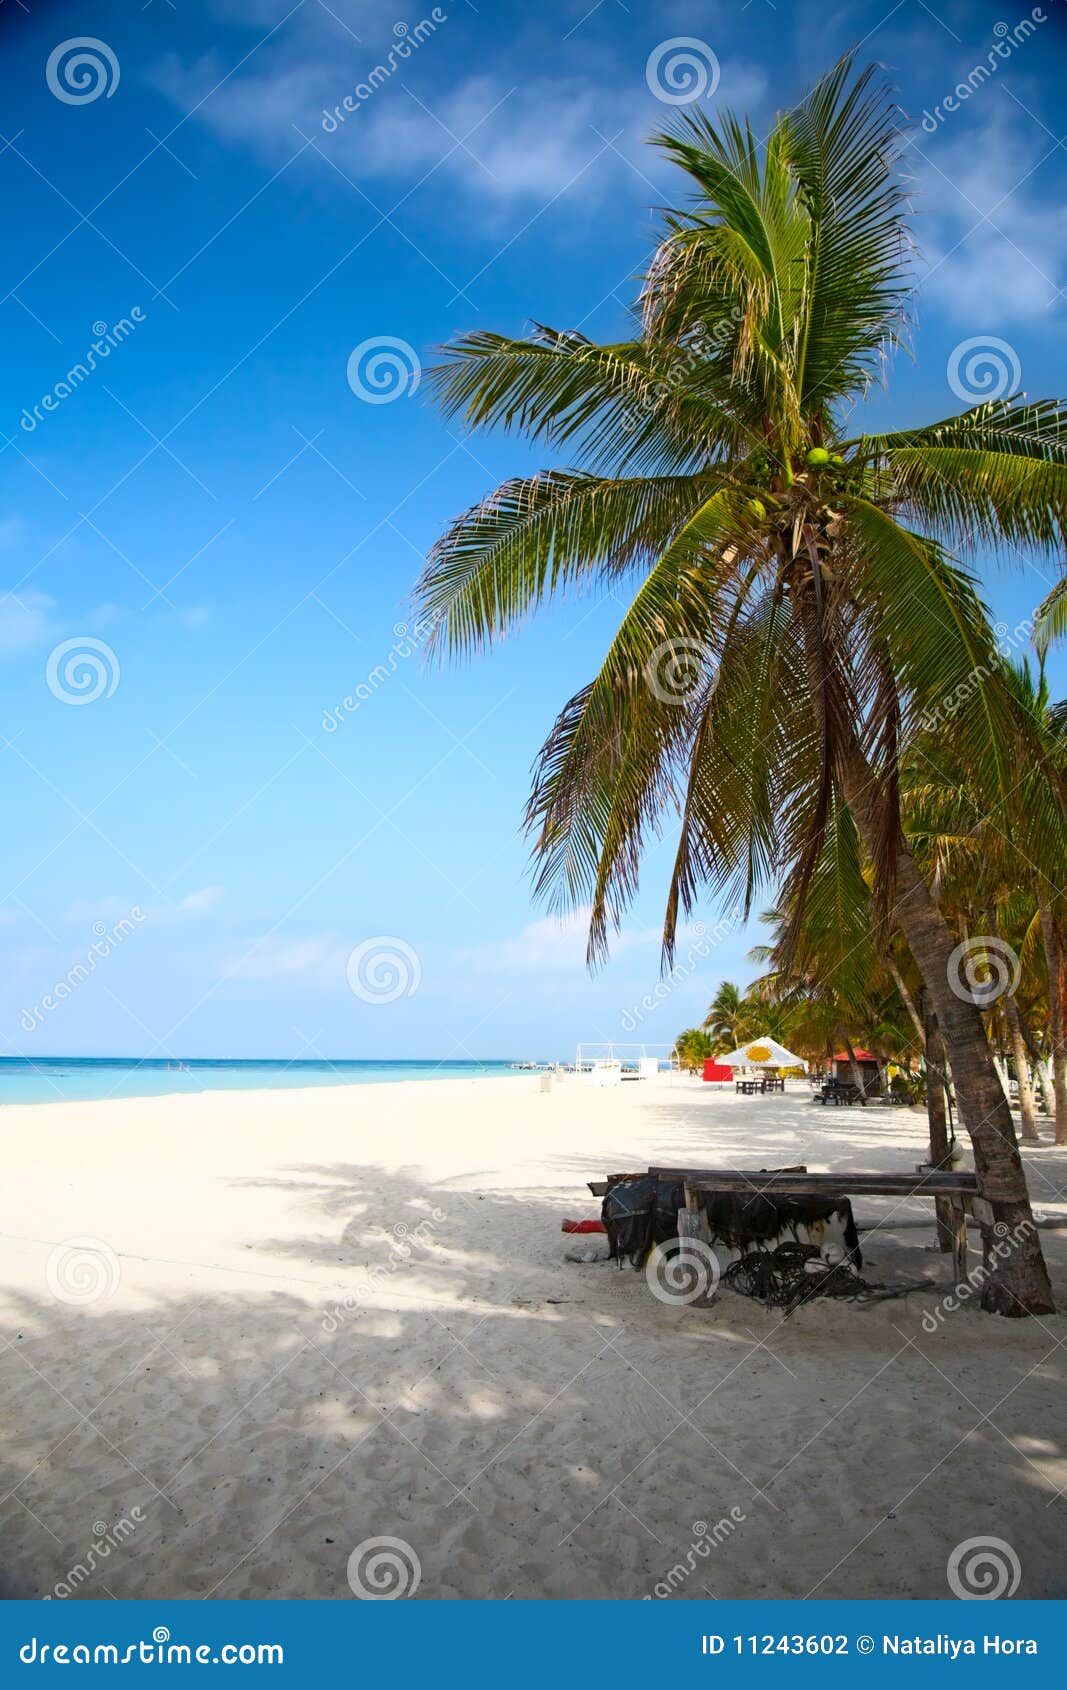 beach on the isla mujeres